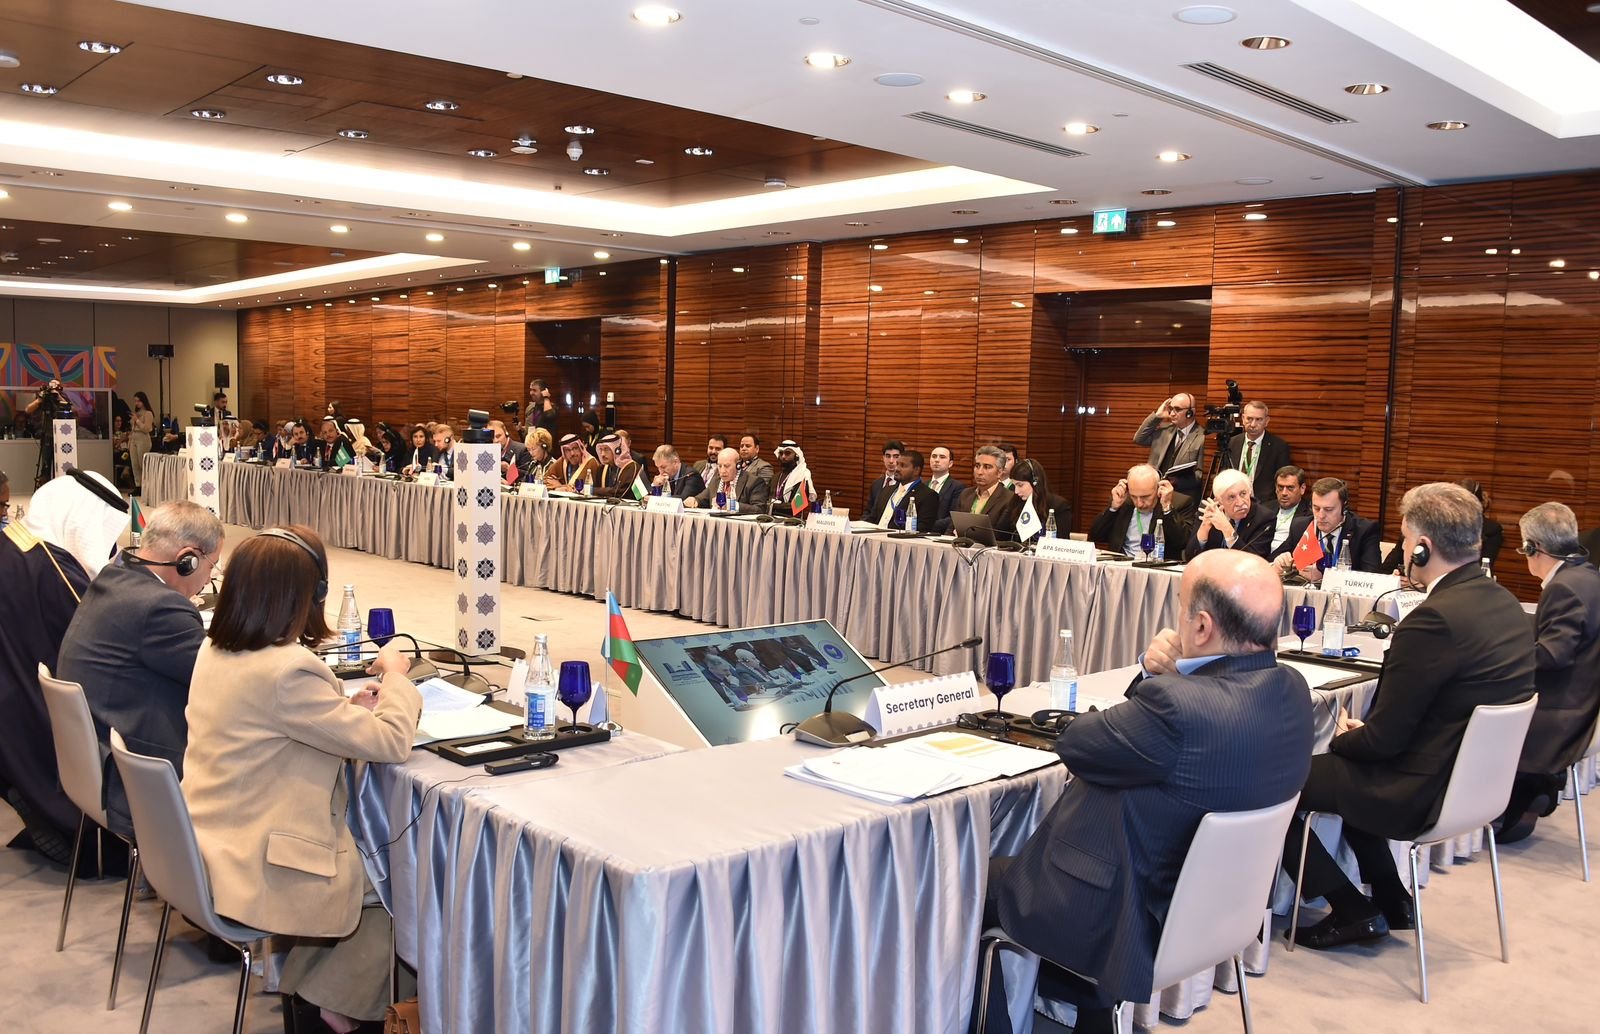 Baku hosts meeting of Asian Parliamentary Assembly's Executive Council (PHOTO)